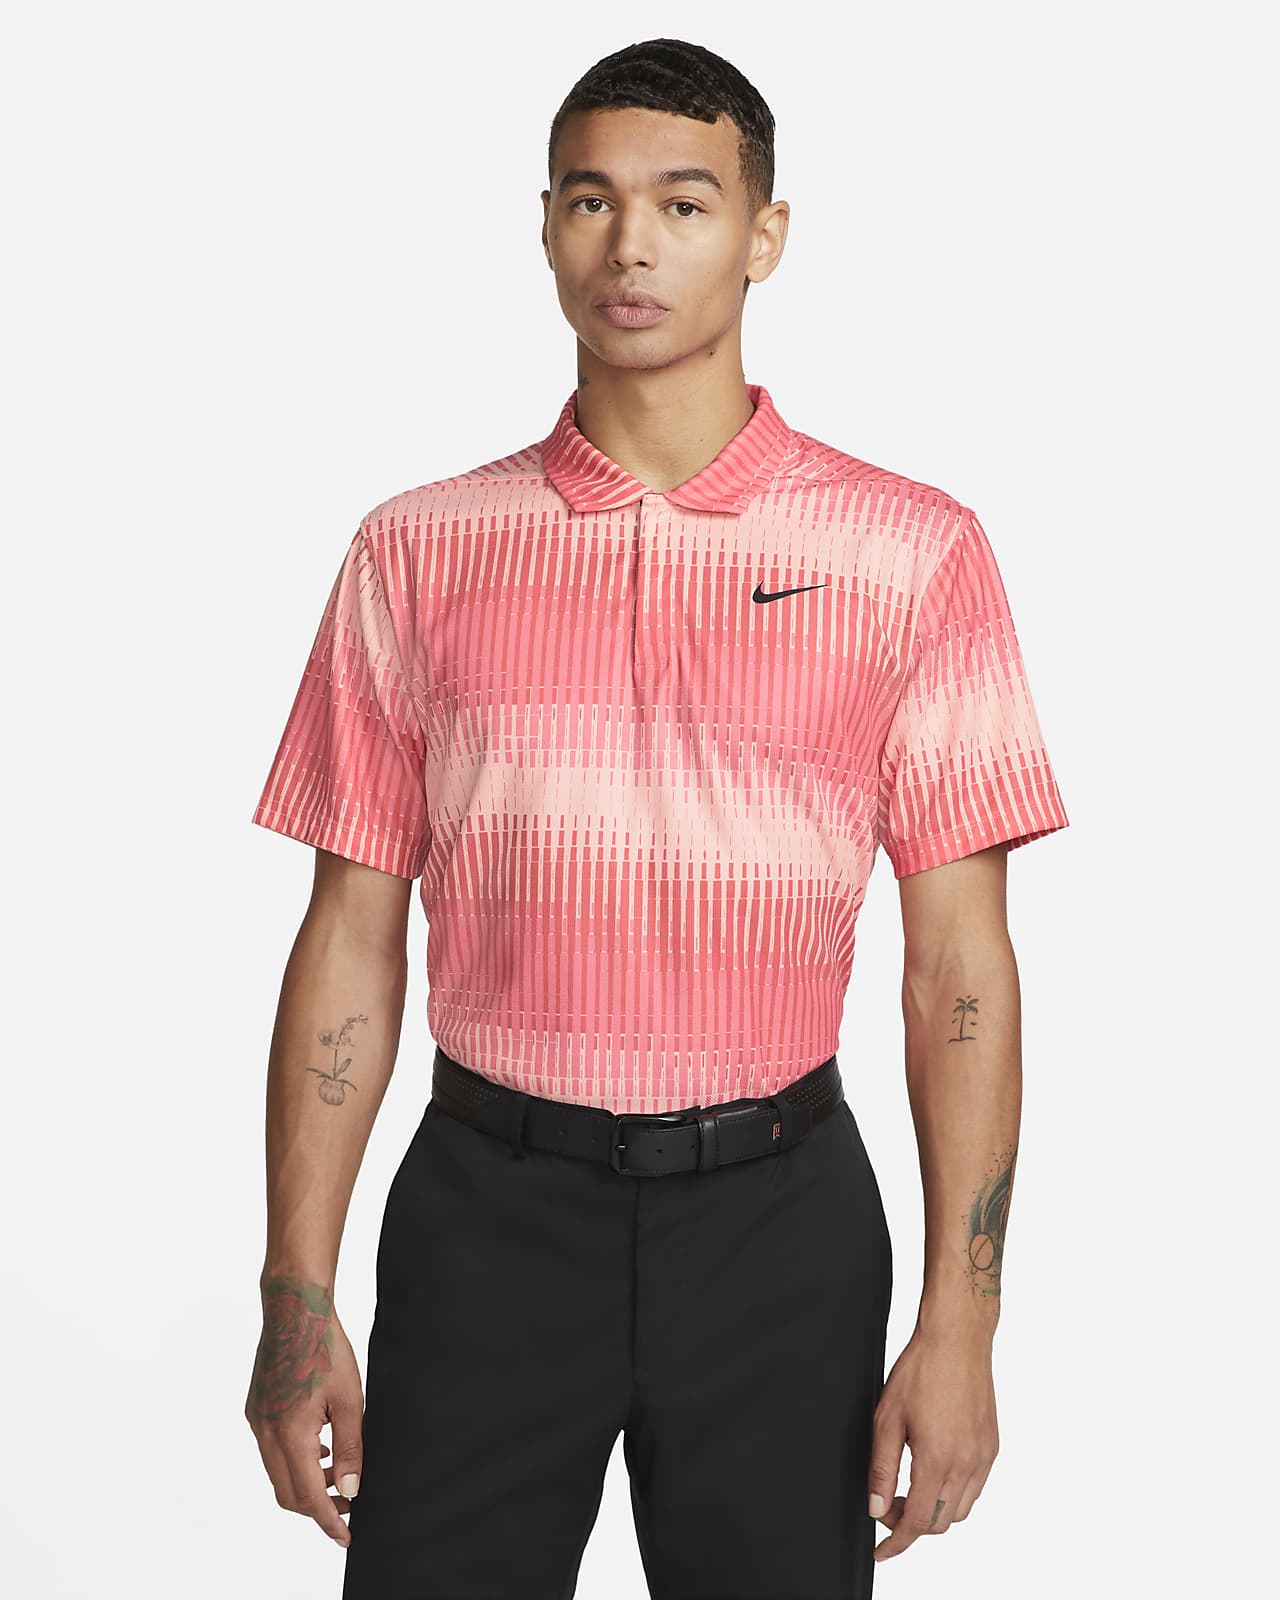 labio Previamente En la cabeza de Polo de golf para hombre Nike Dri-FIT ADV Tiger Woods. Nike.com